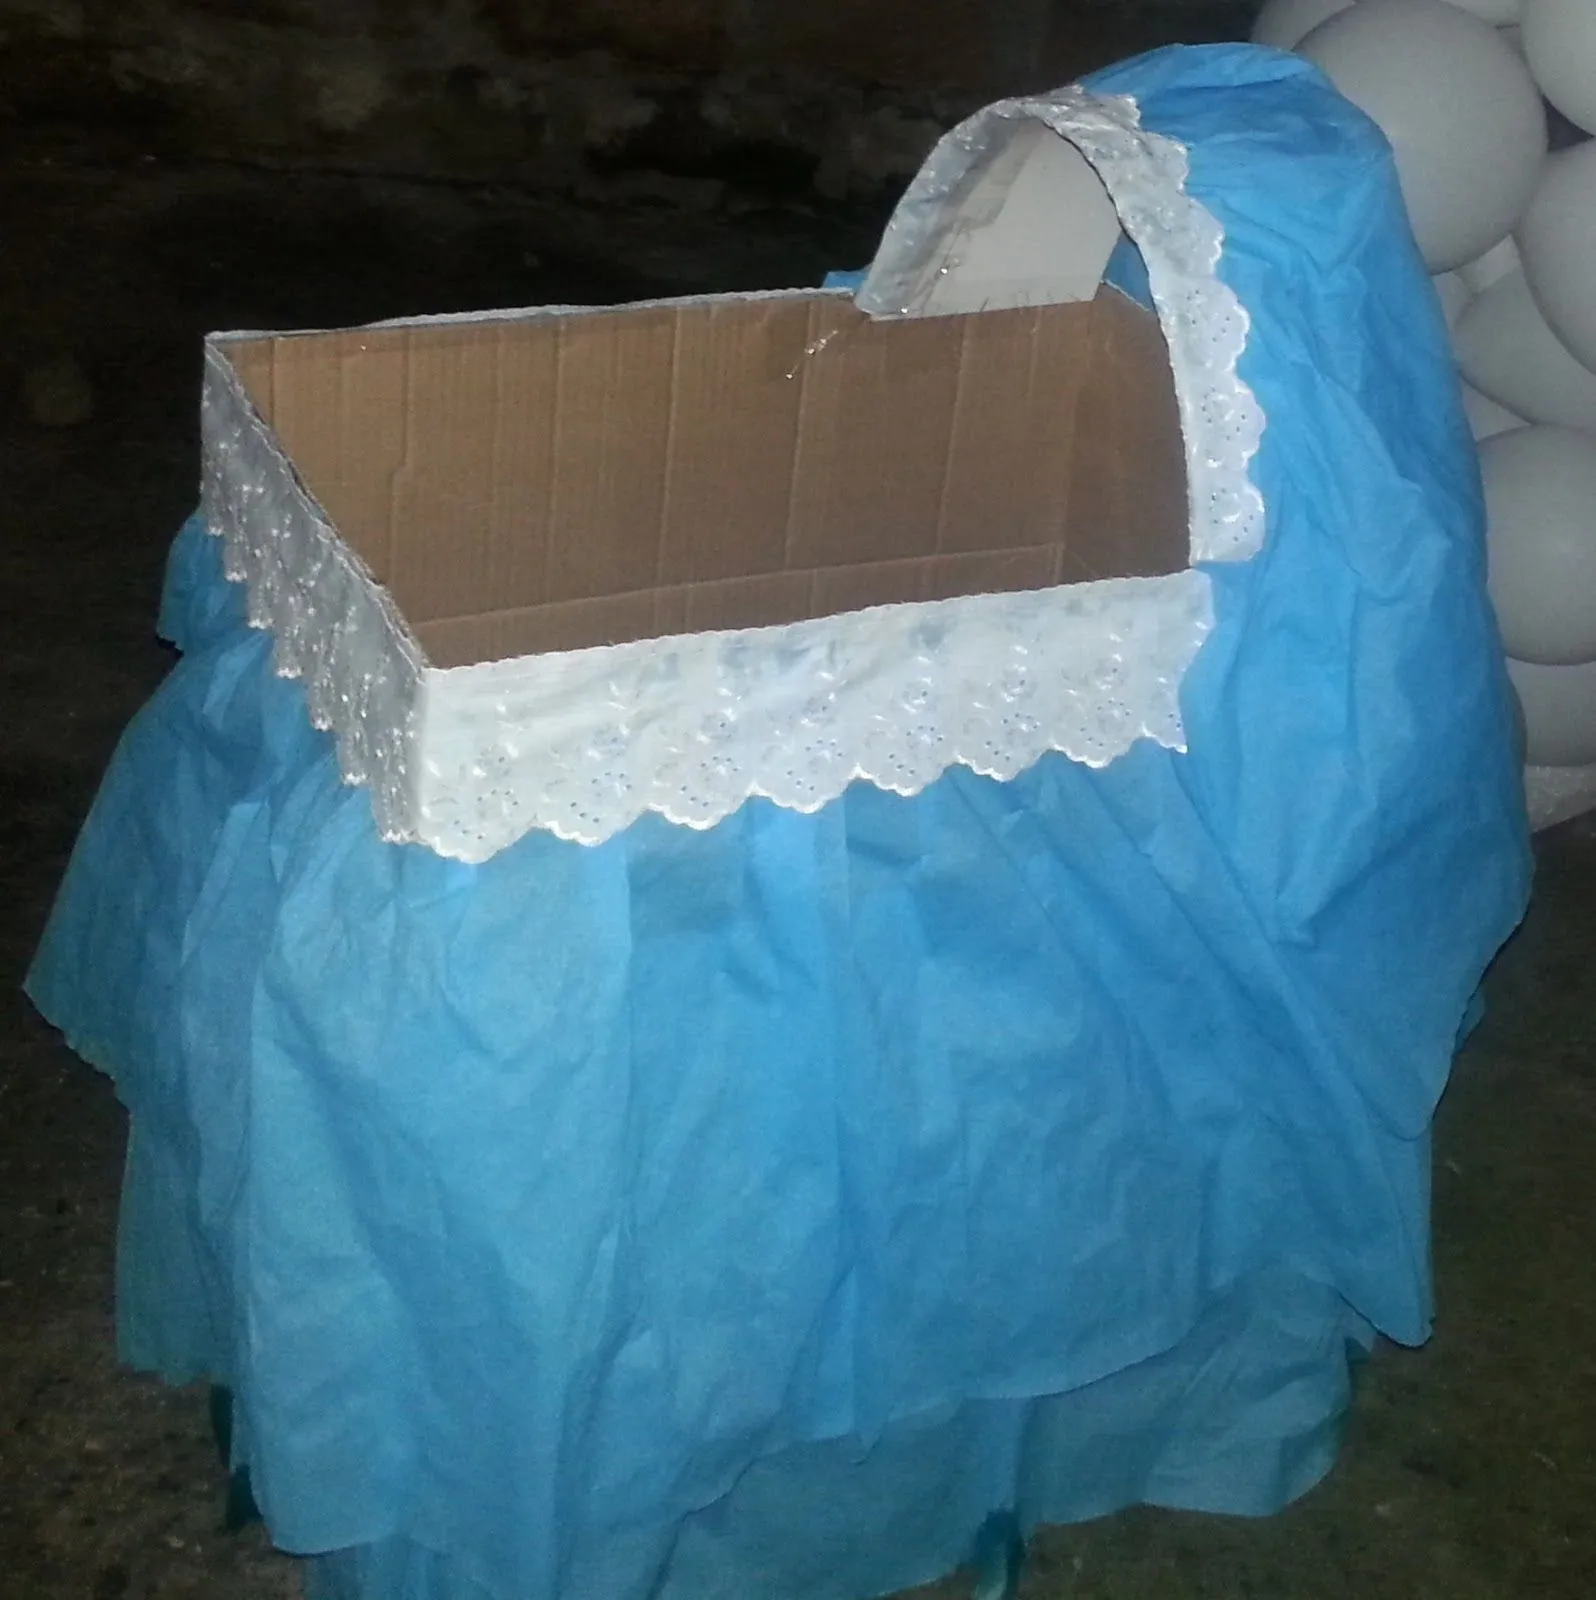 Caja de regalos de cuna para baby shower - Imagui